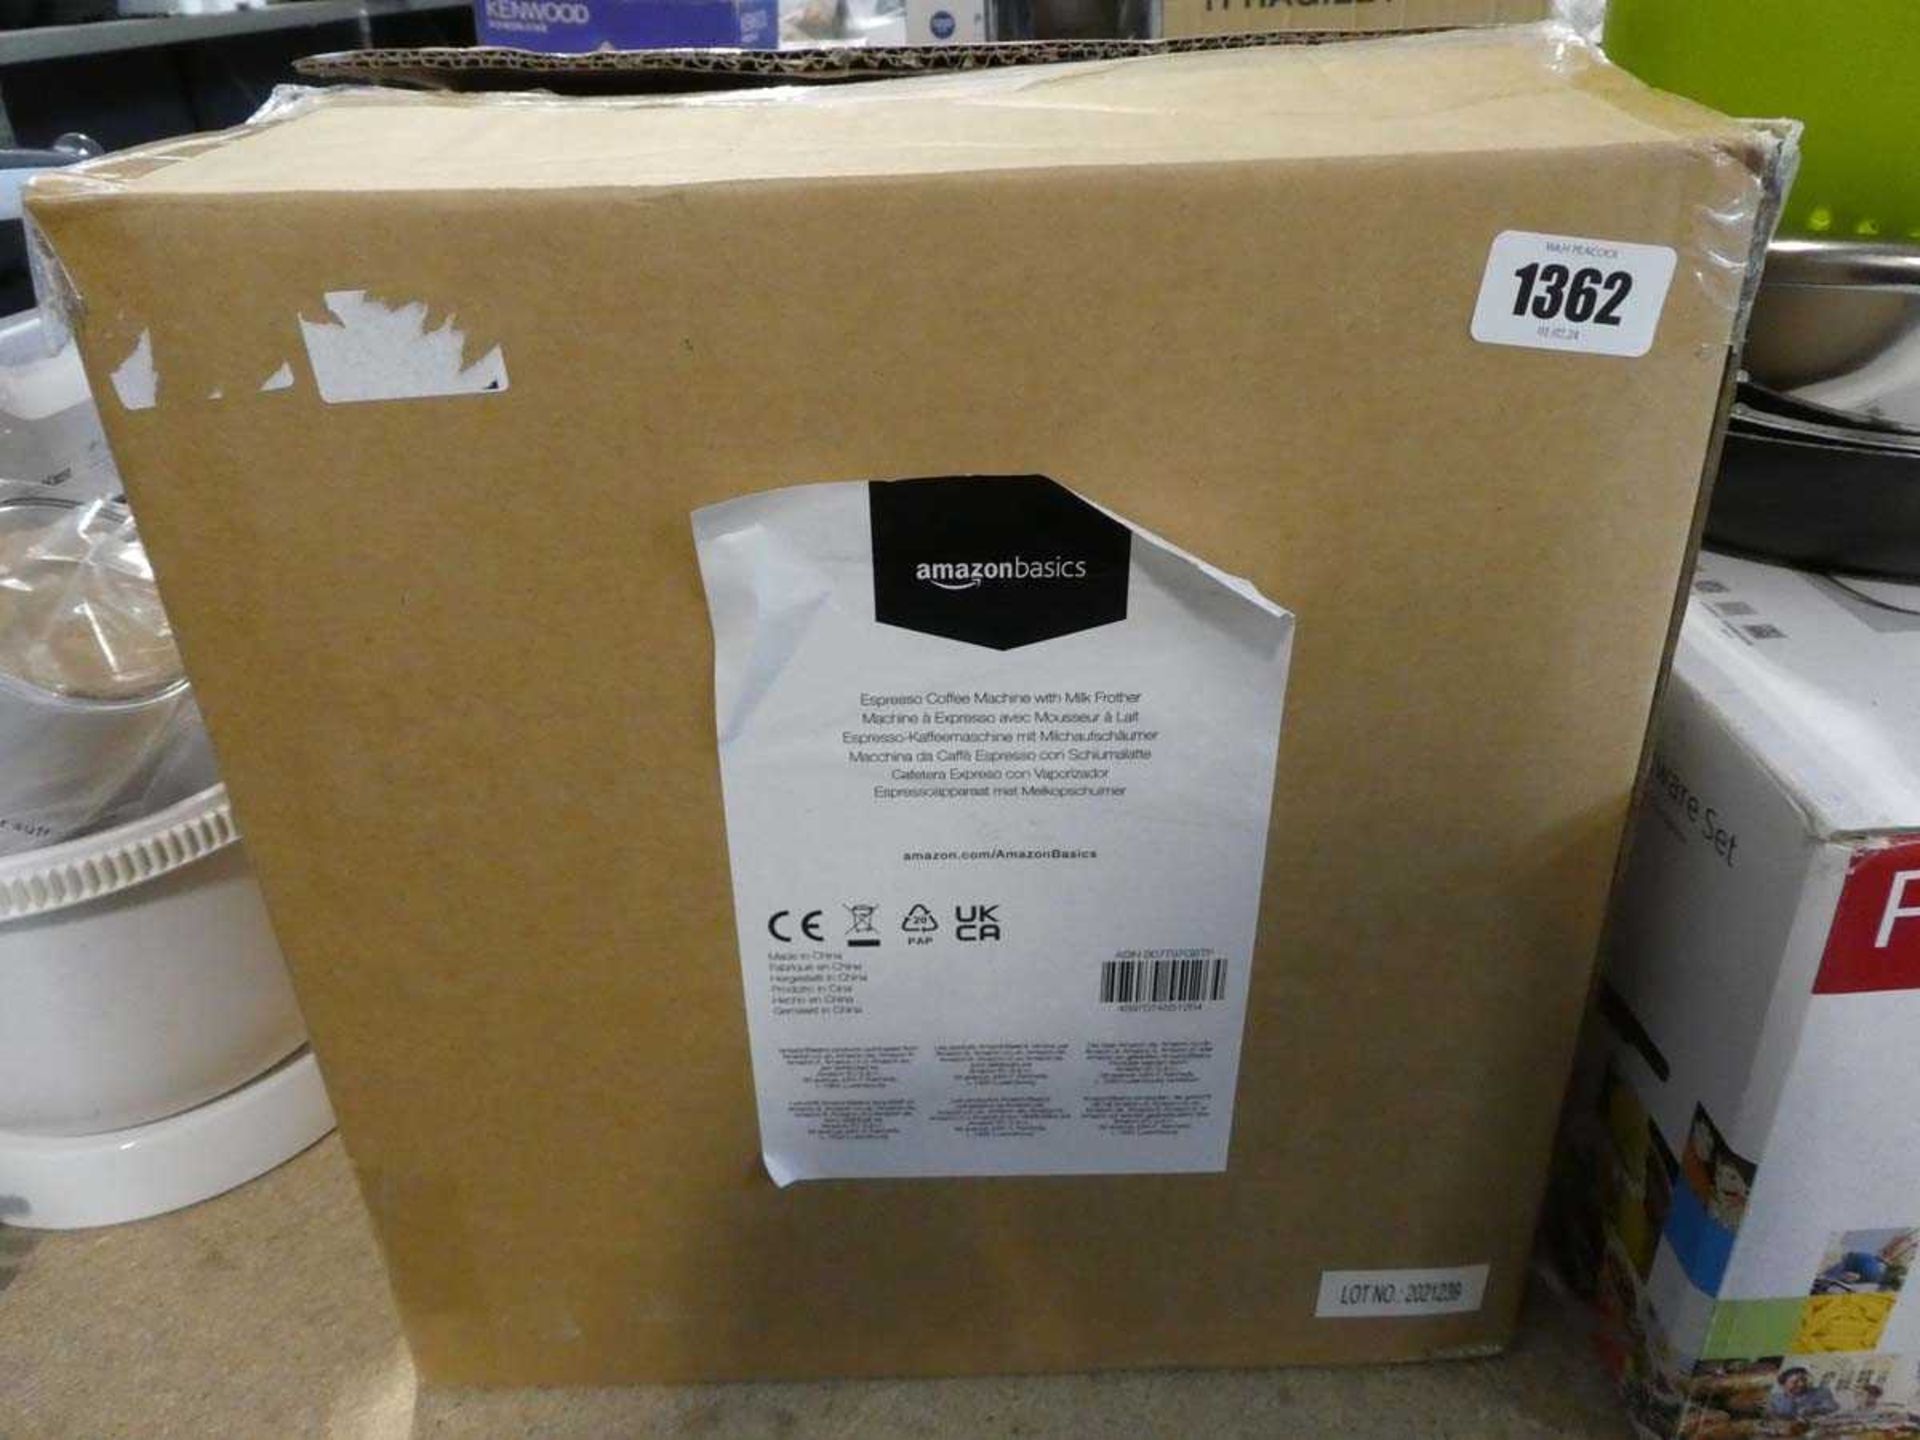 Boxed Amazon Basics Espresso coffee machine with milk frother